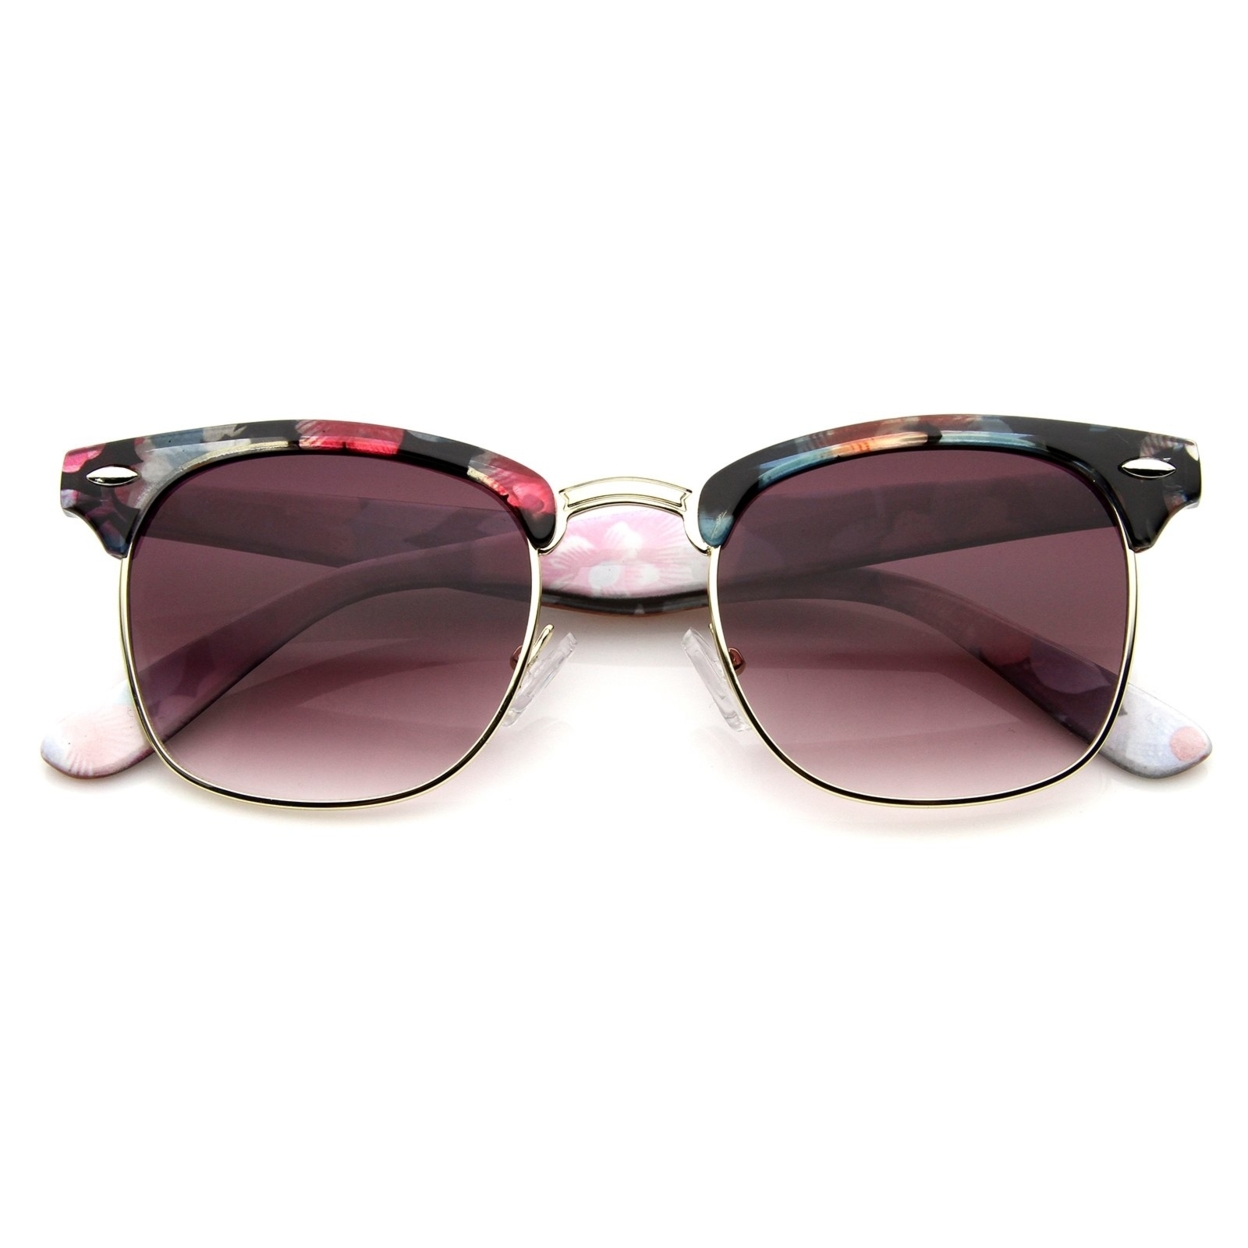 Women's Floral Printed Square Half Frame Horn Rimmed Sunglasses 50mm - Teal-Pink / Pink Gradient